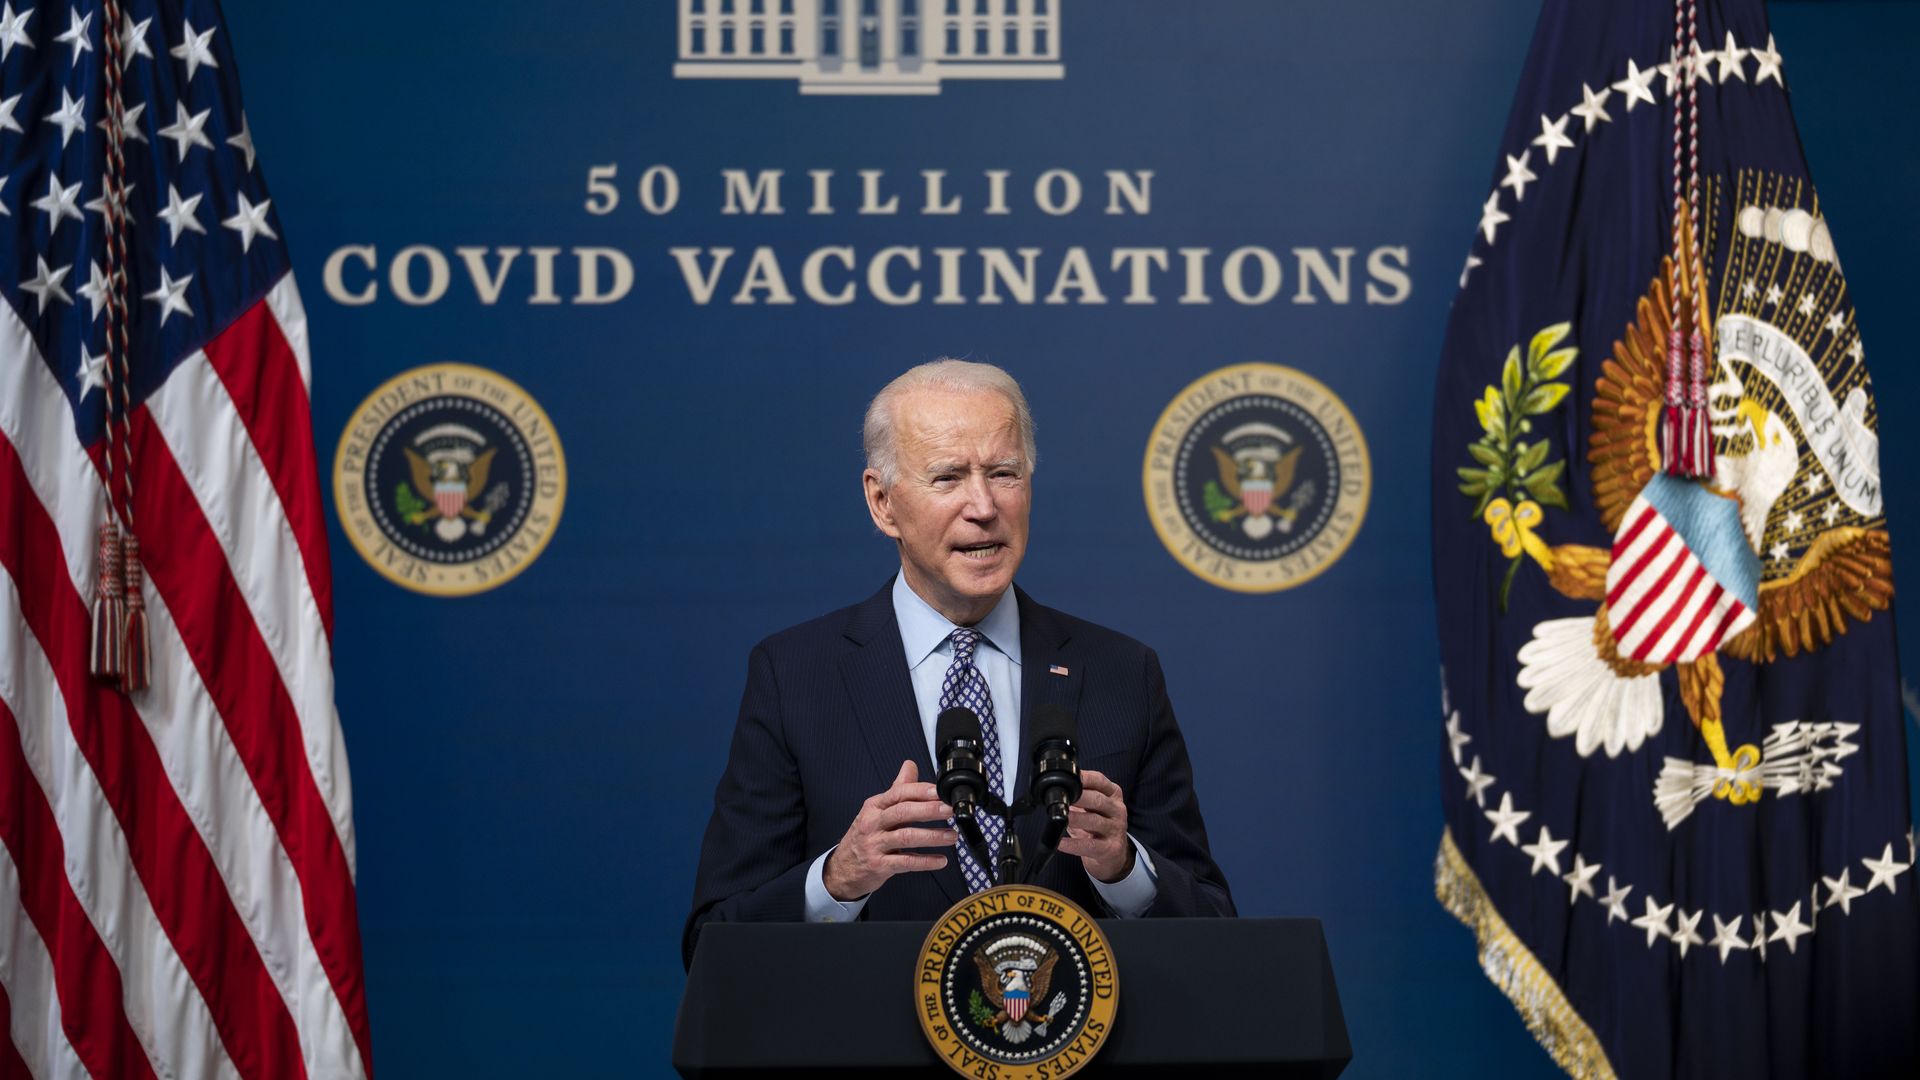 Joe Biden speaks during an event commemorating the 50 million COVID-19 vaccine shot